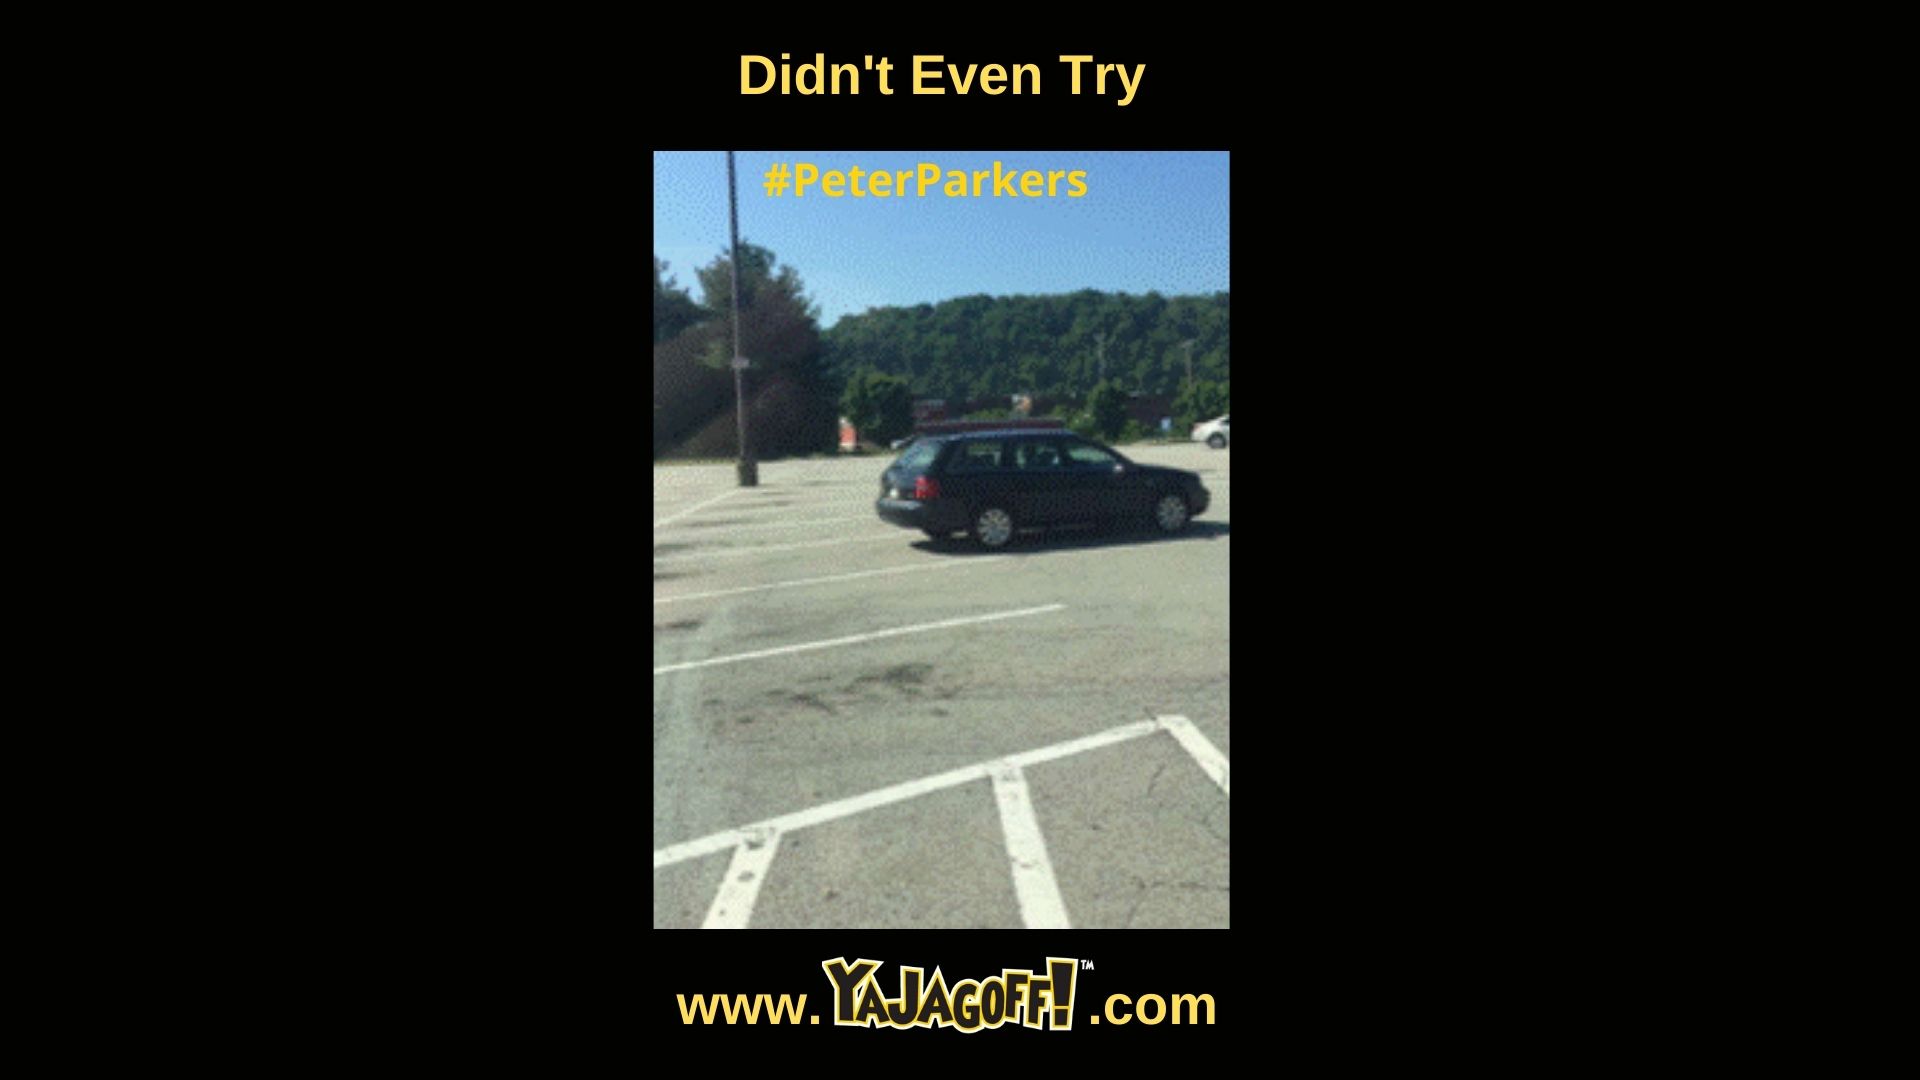 Bad parking